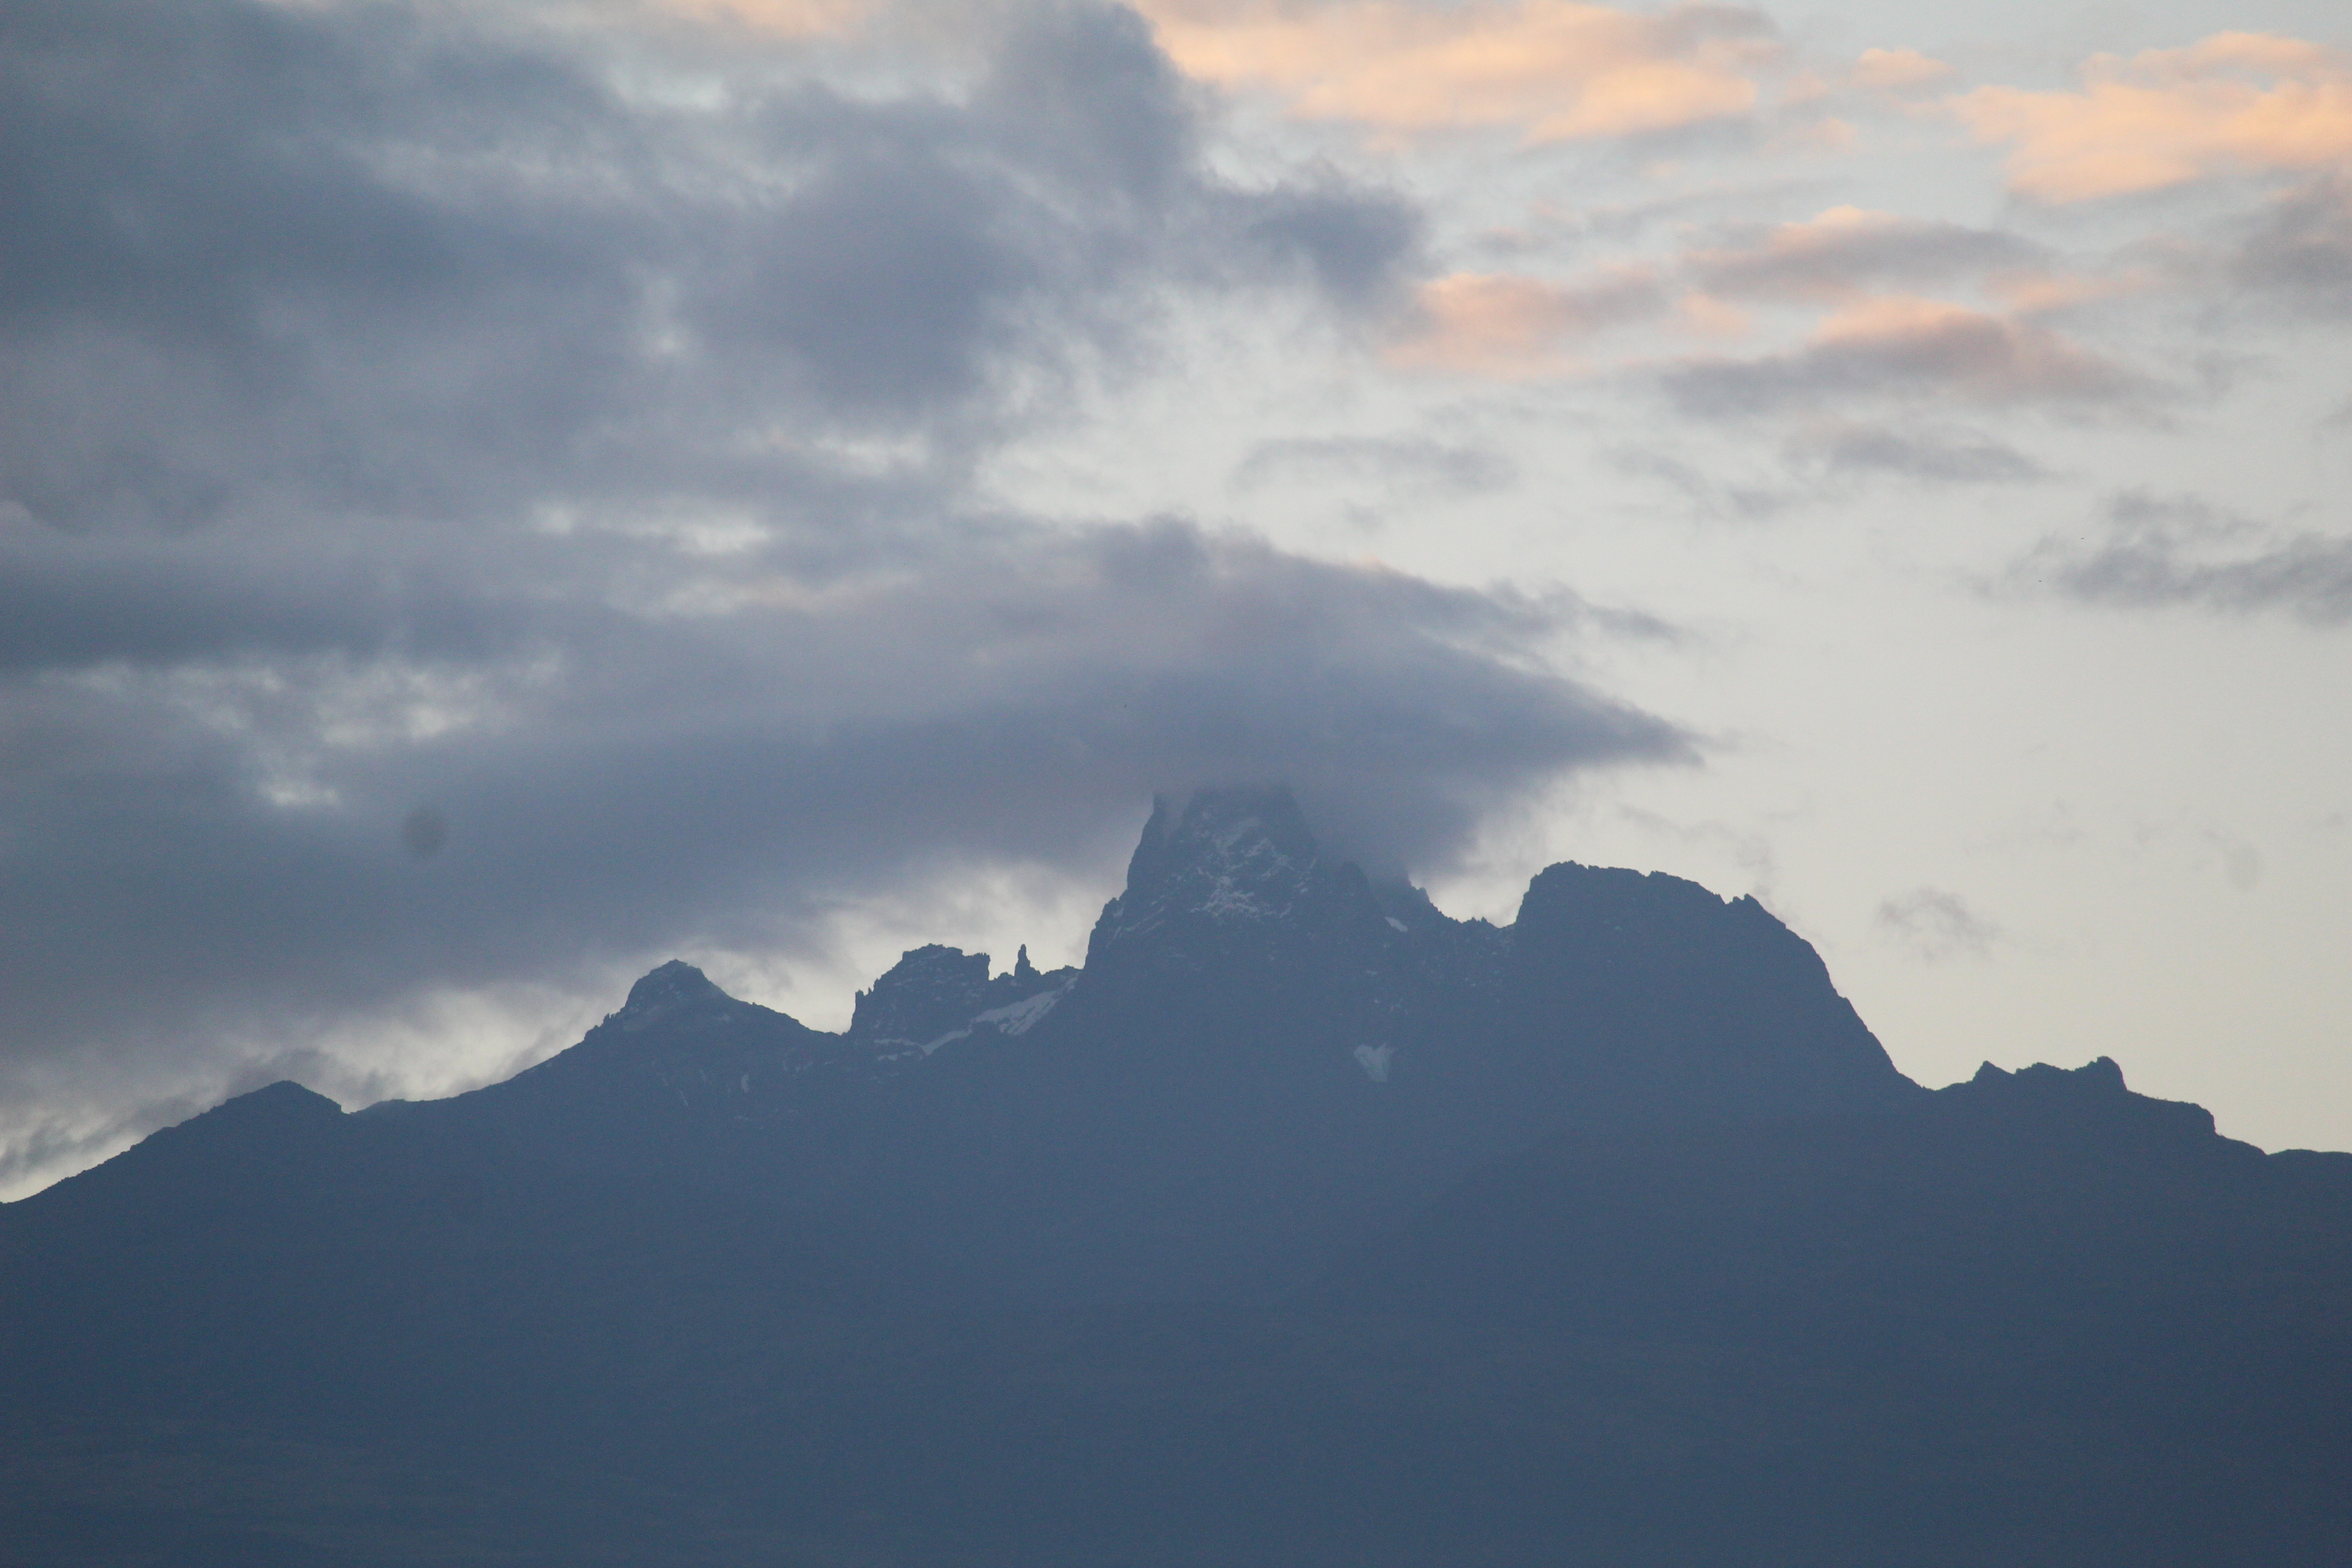 Greetings from Mount Kenya